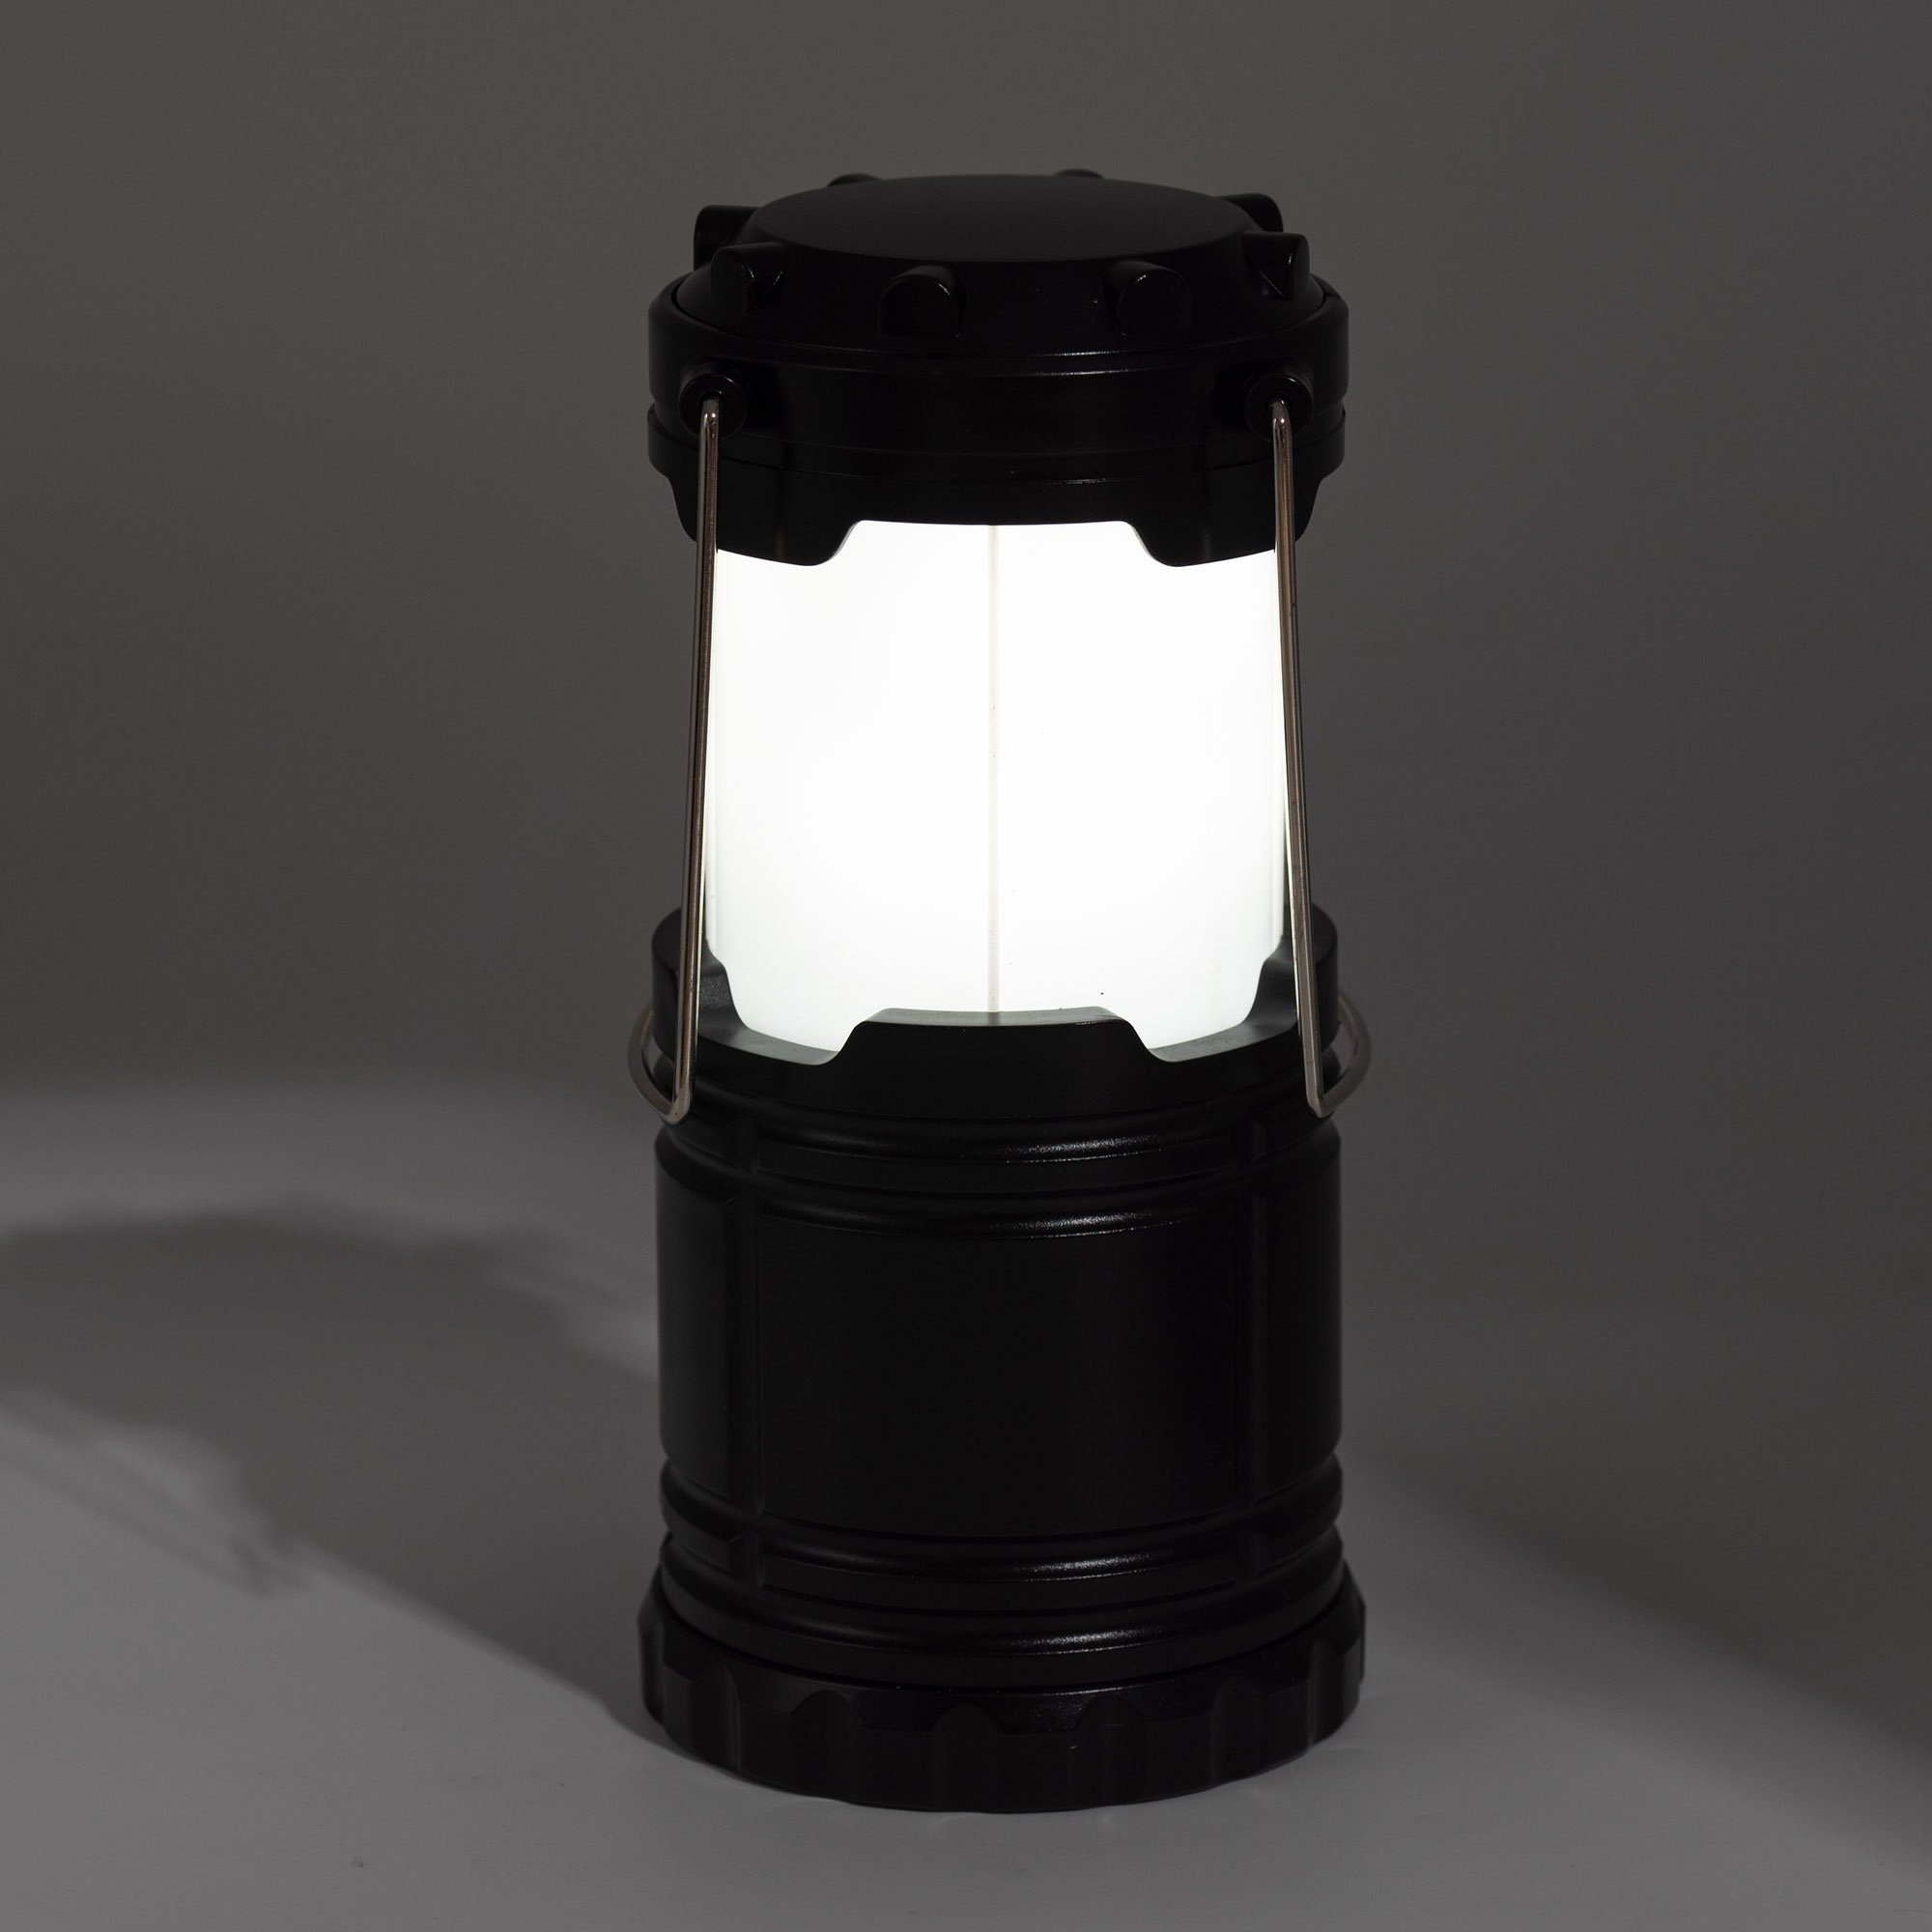 Batterie, Effekt Taschenlampe Leuchte Garten, Lampe BENSON Campinglampe Zelt LED Flammen, Laterne, 2in1